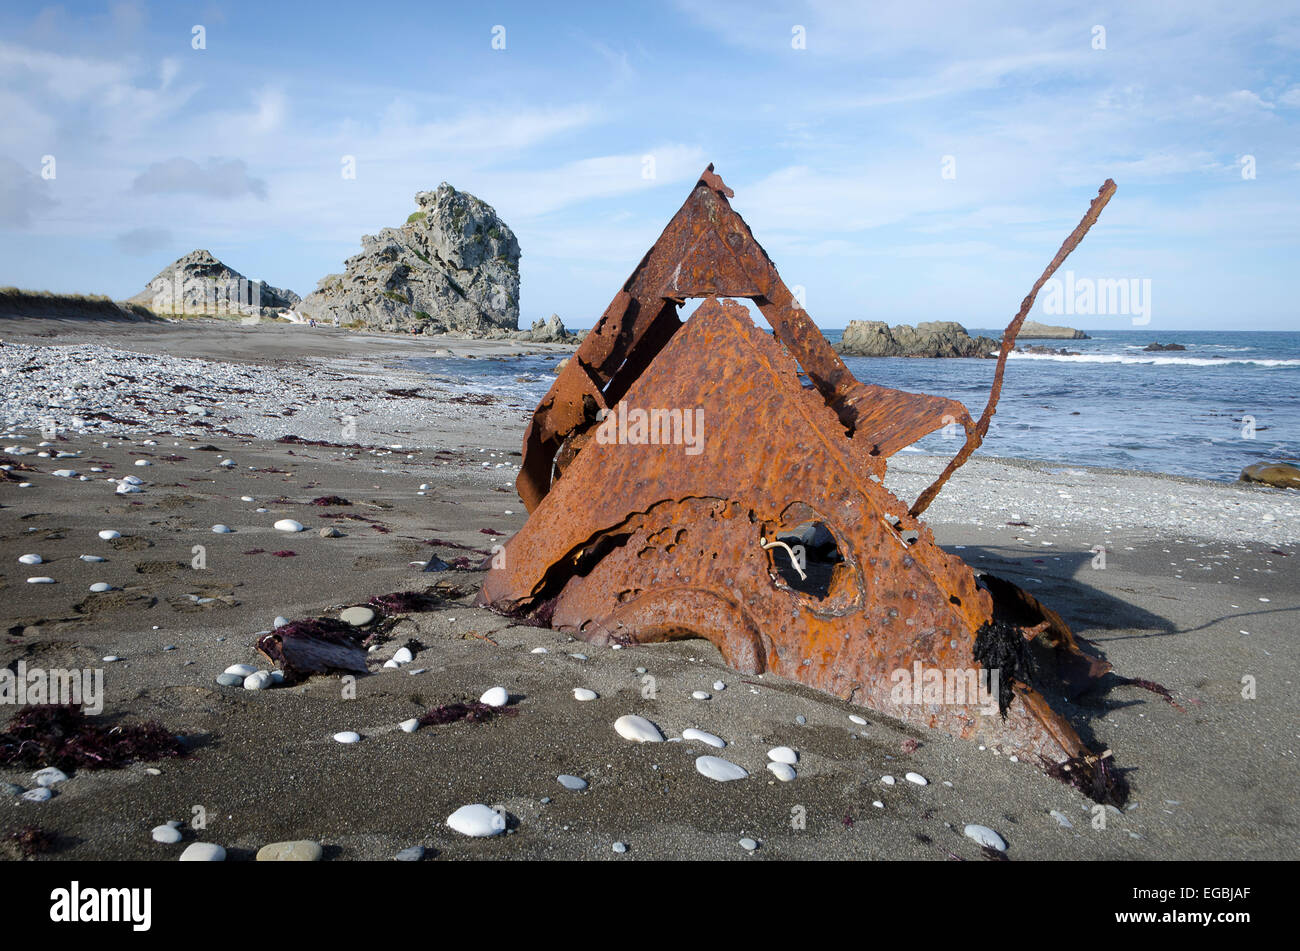 Remains of wreck of the ship 'Tuvalu' on beach near Honeycomb Rocks, Glenburn, Wairarapa, North Island, New Zealand Stock Photo